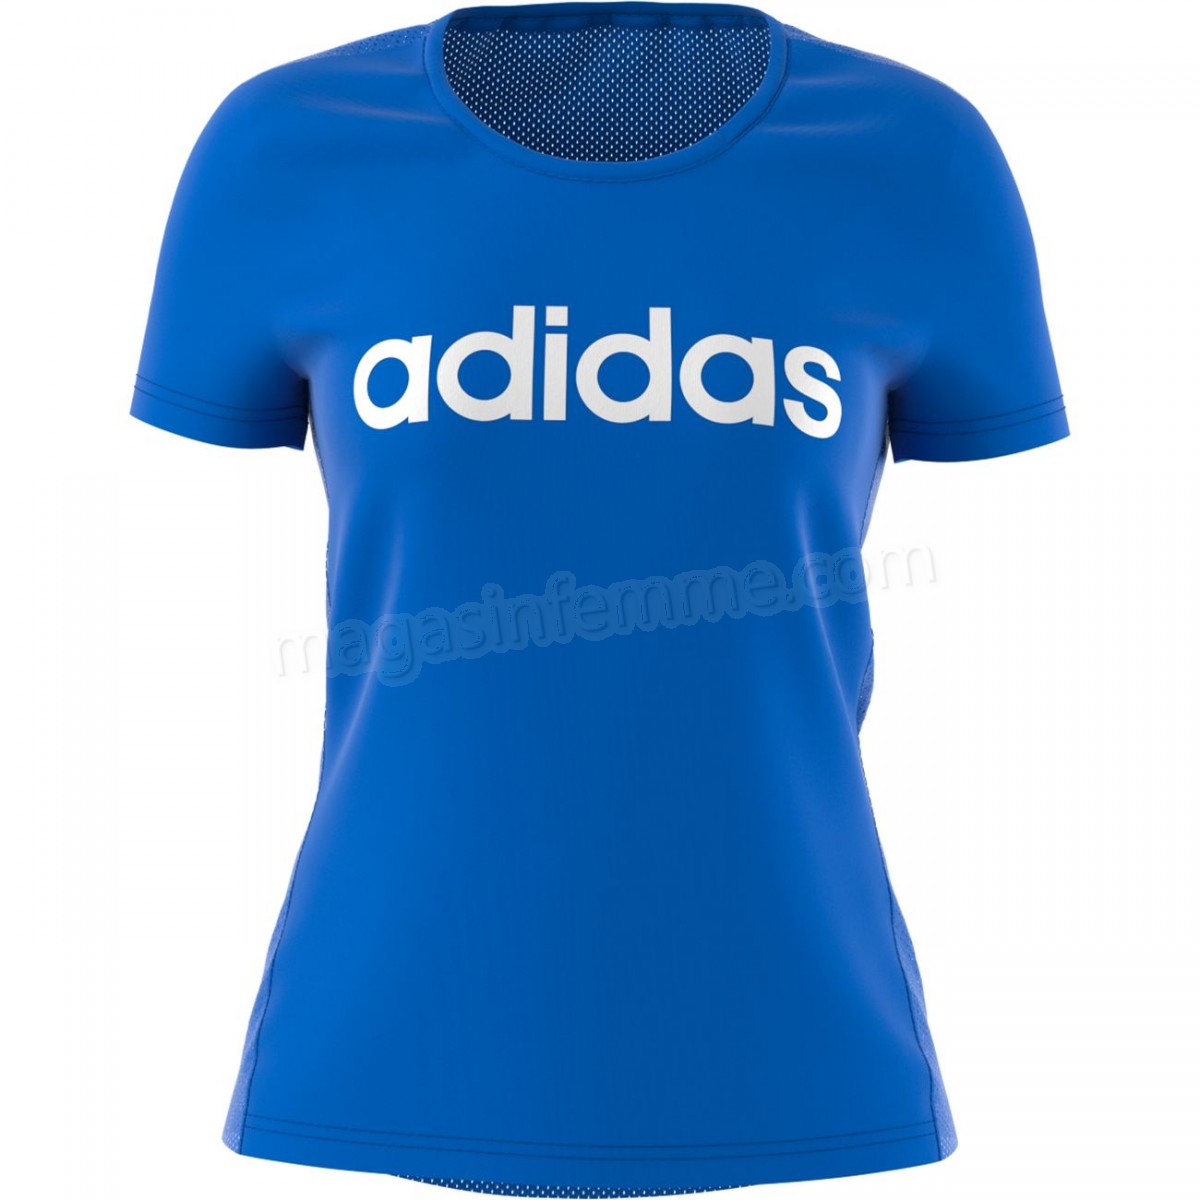 Adidas-Fitness femme ADIDAS T-shirt femme adidas Design 2 Move Logo en solde - -4